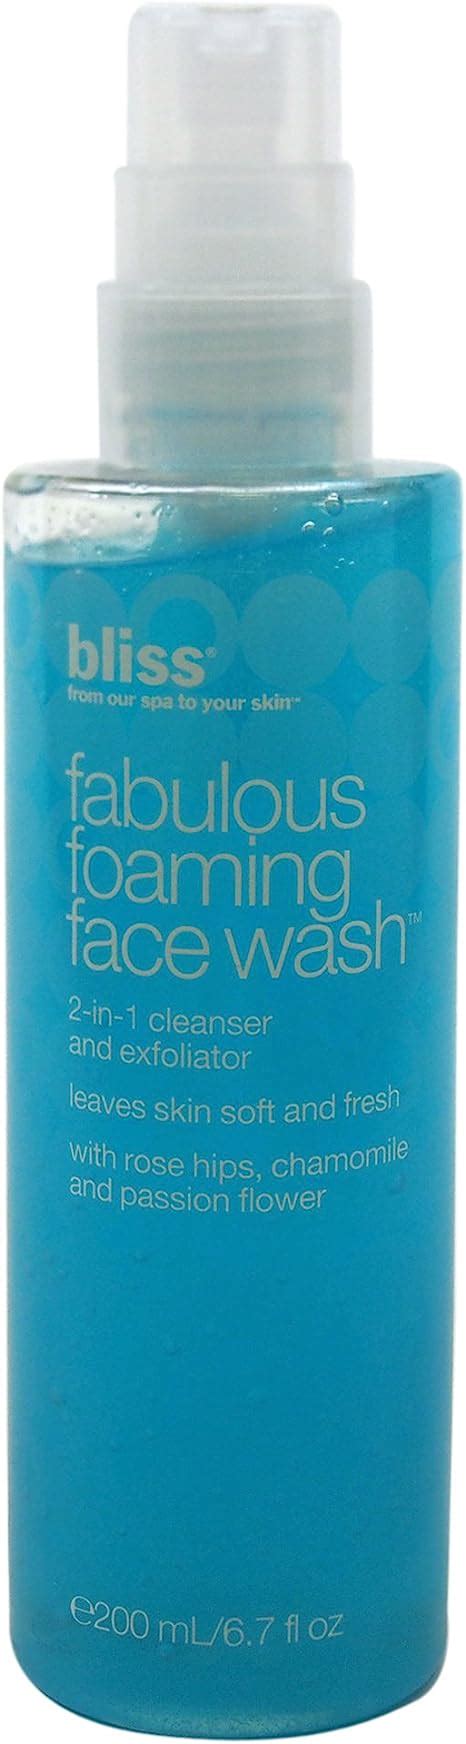 Bliss Fabulous Foaming Face Wash 197ml66oz Uk Beauty